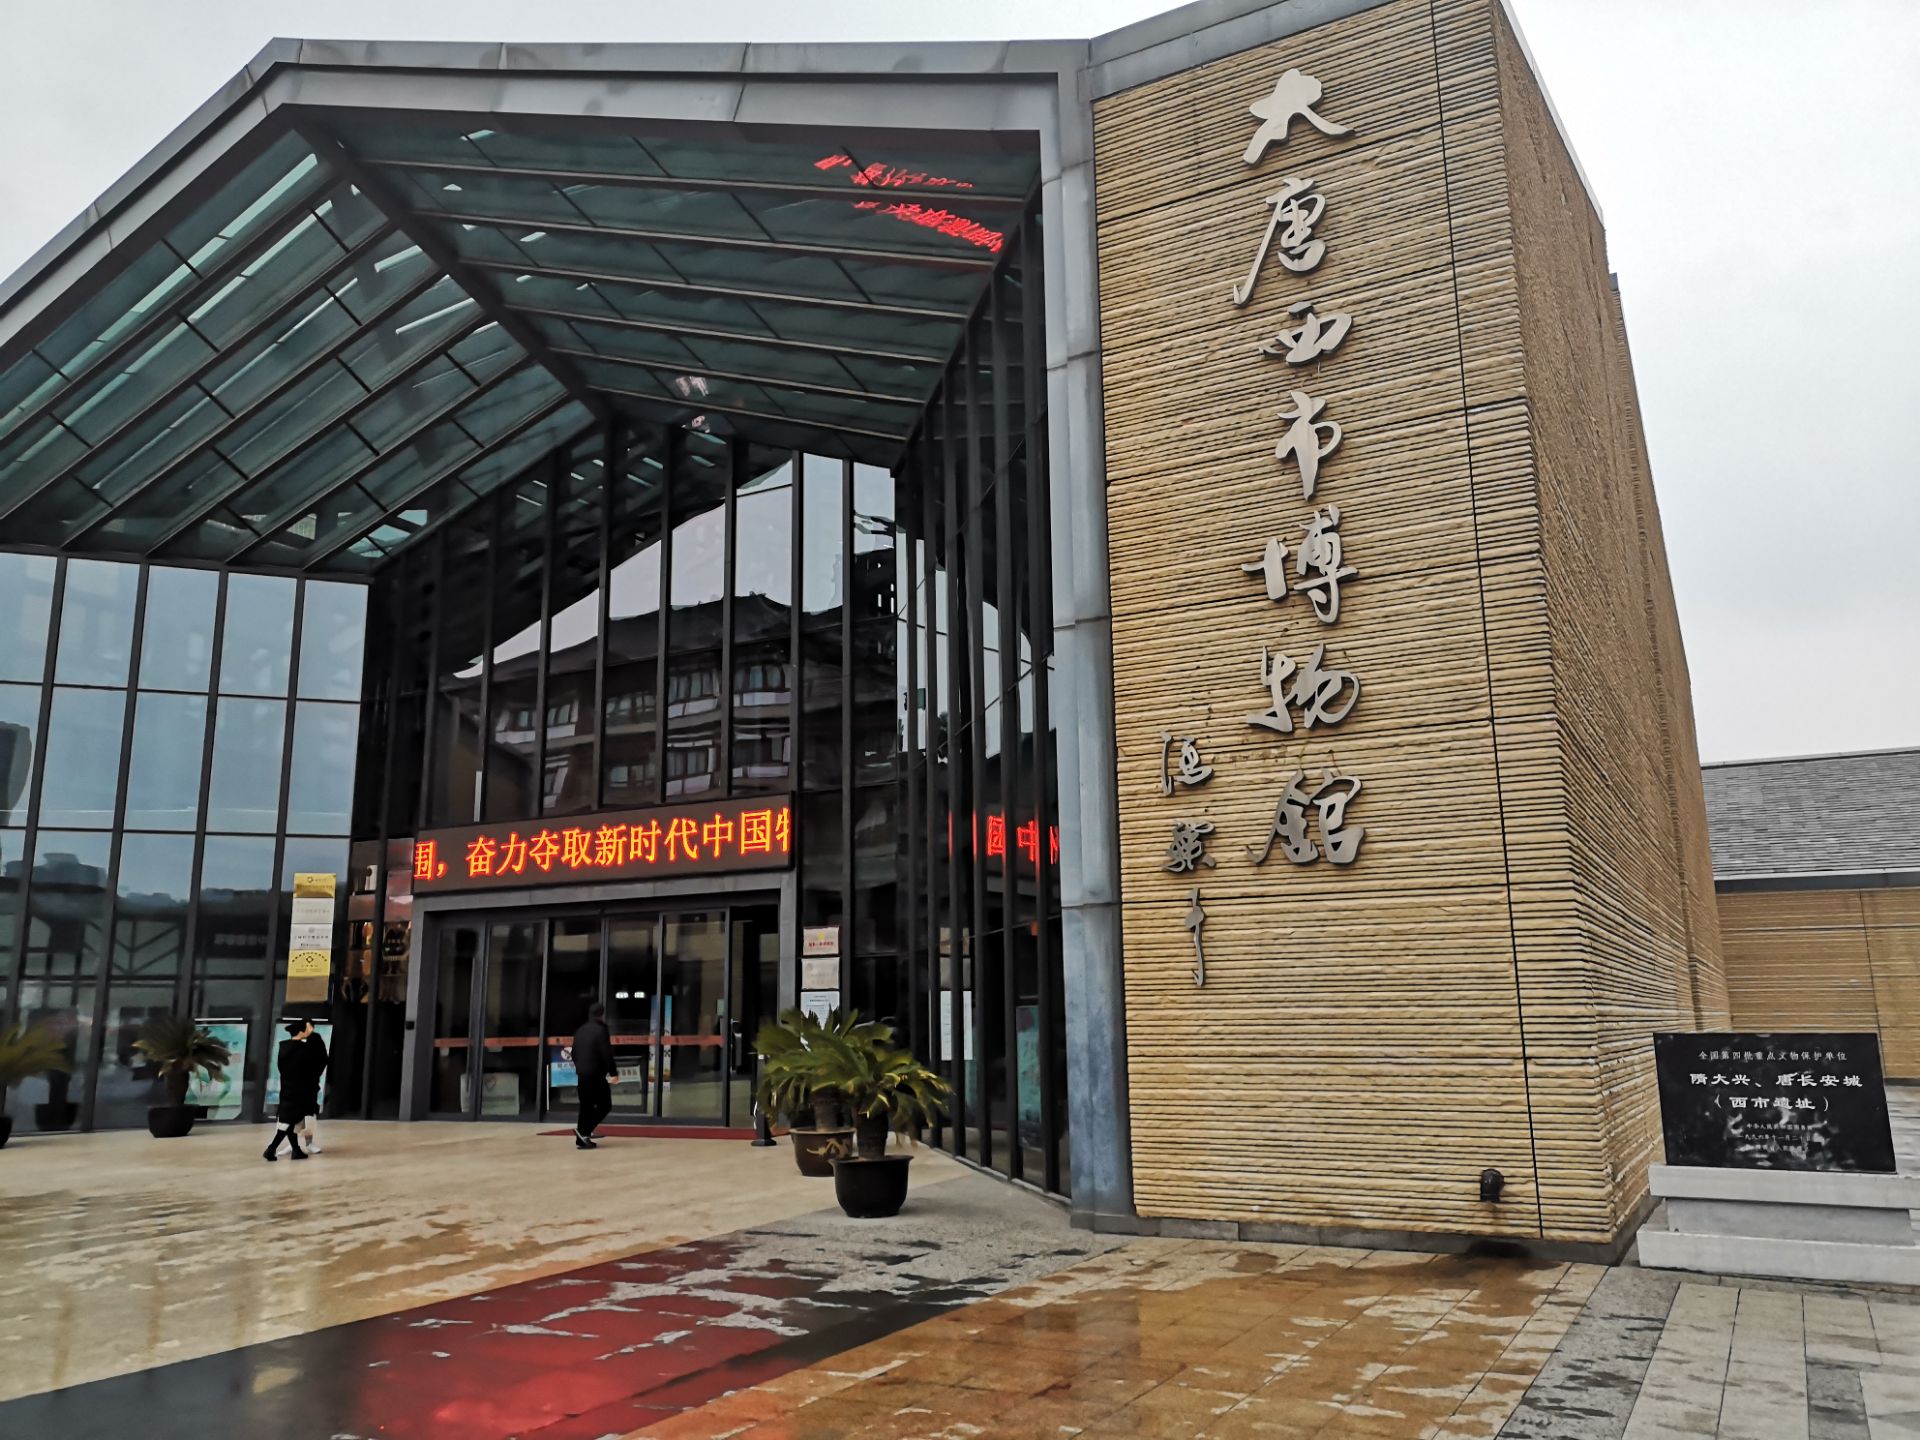 大唐西市博物馆tang west market museum